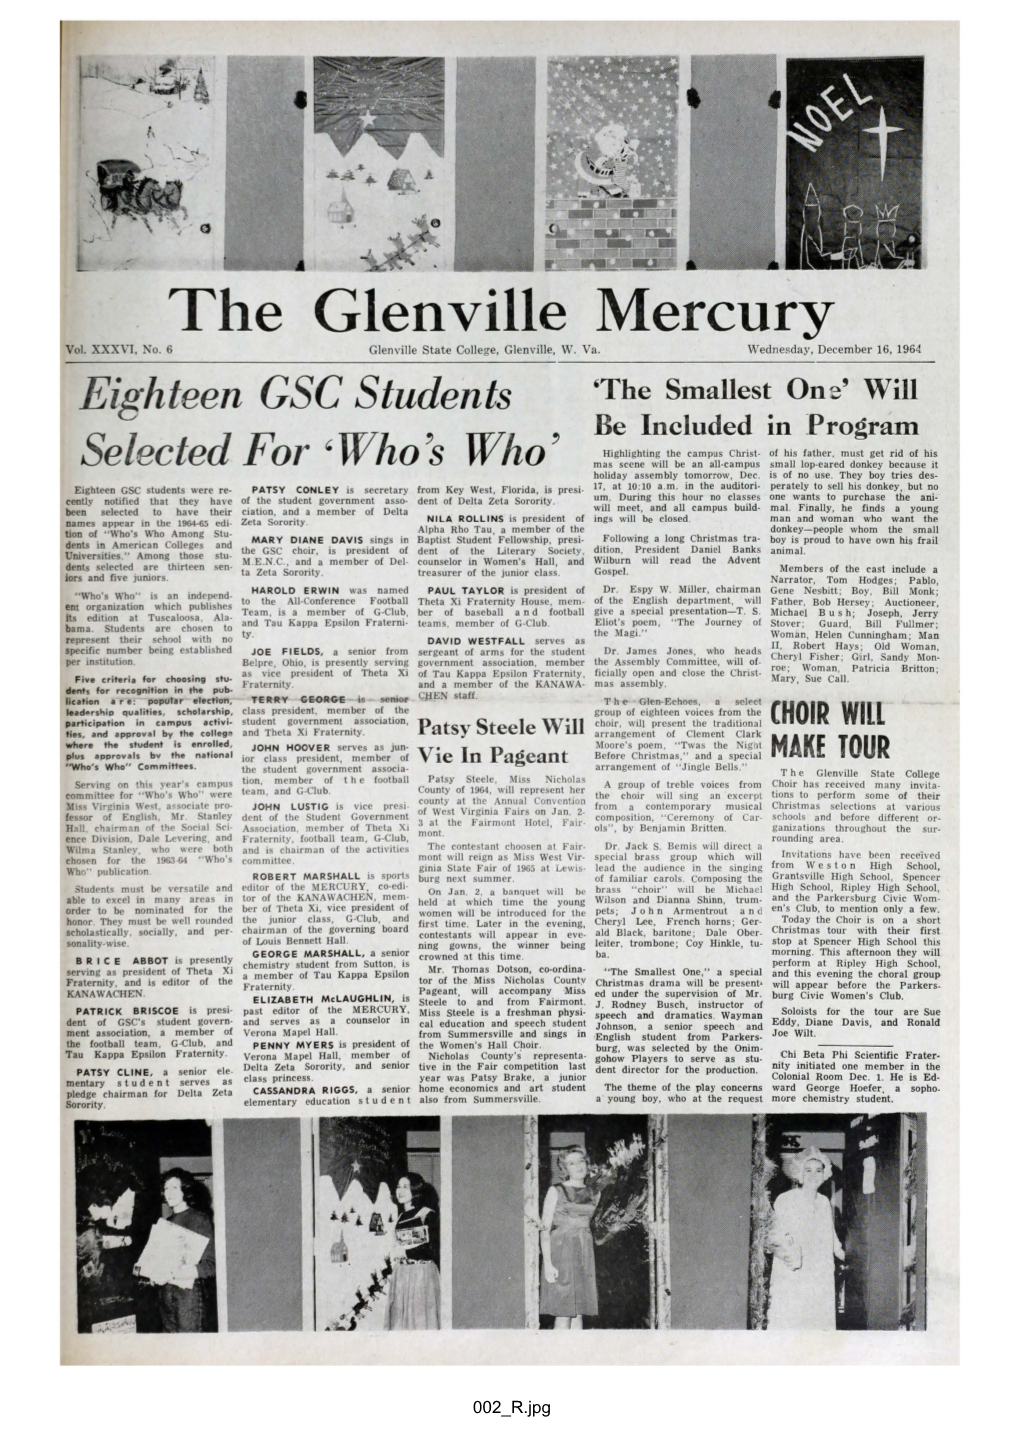 The Glenville Mercury Vol